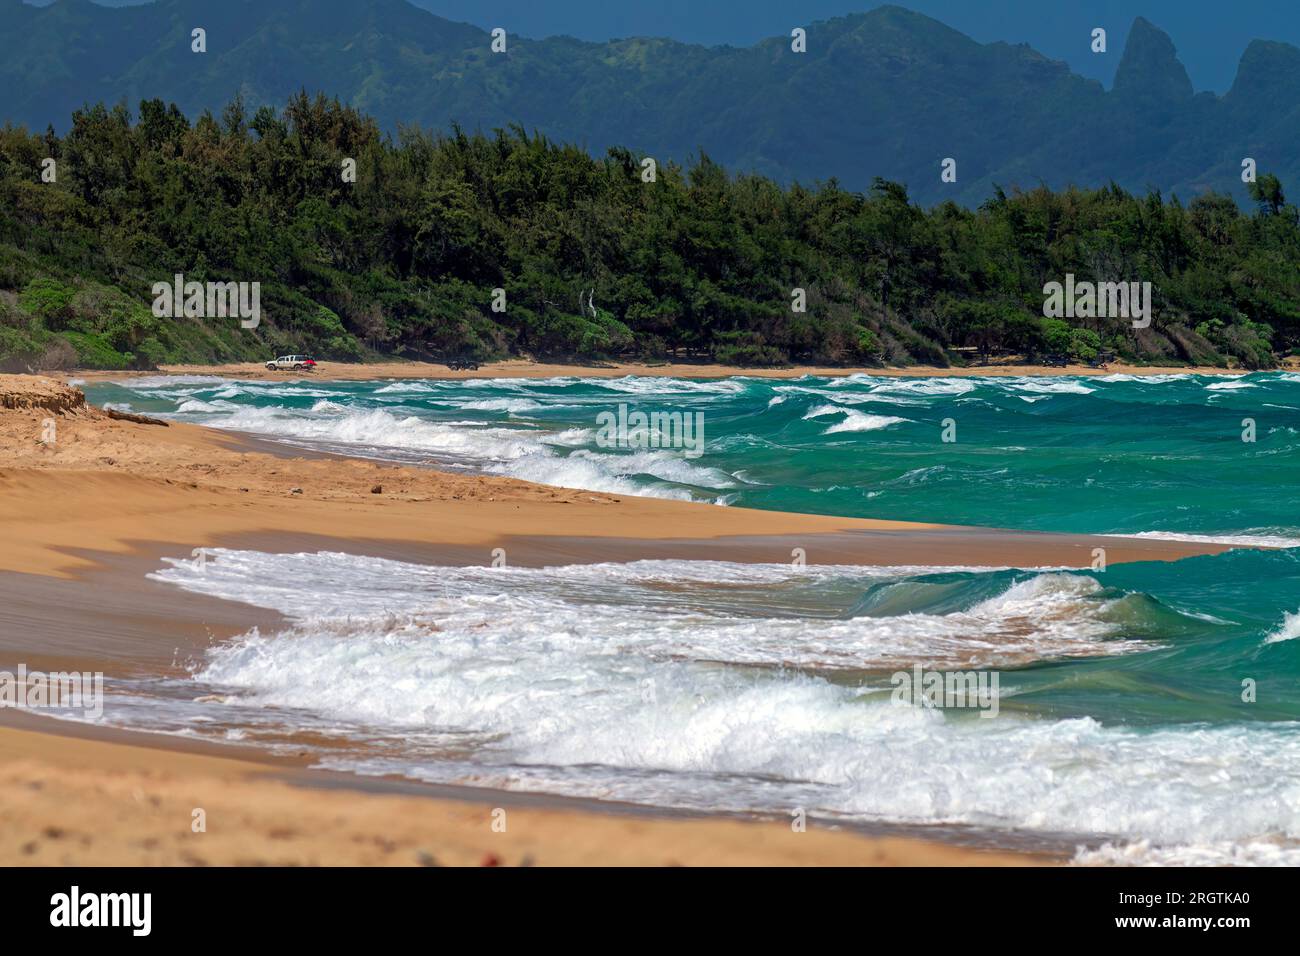 A beautiful beach landscape scene along the Pacific coastline on the island of Kauai, Hawaii. Stock Photo